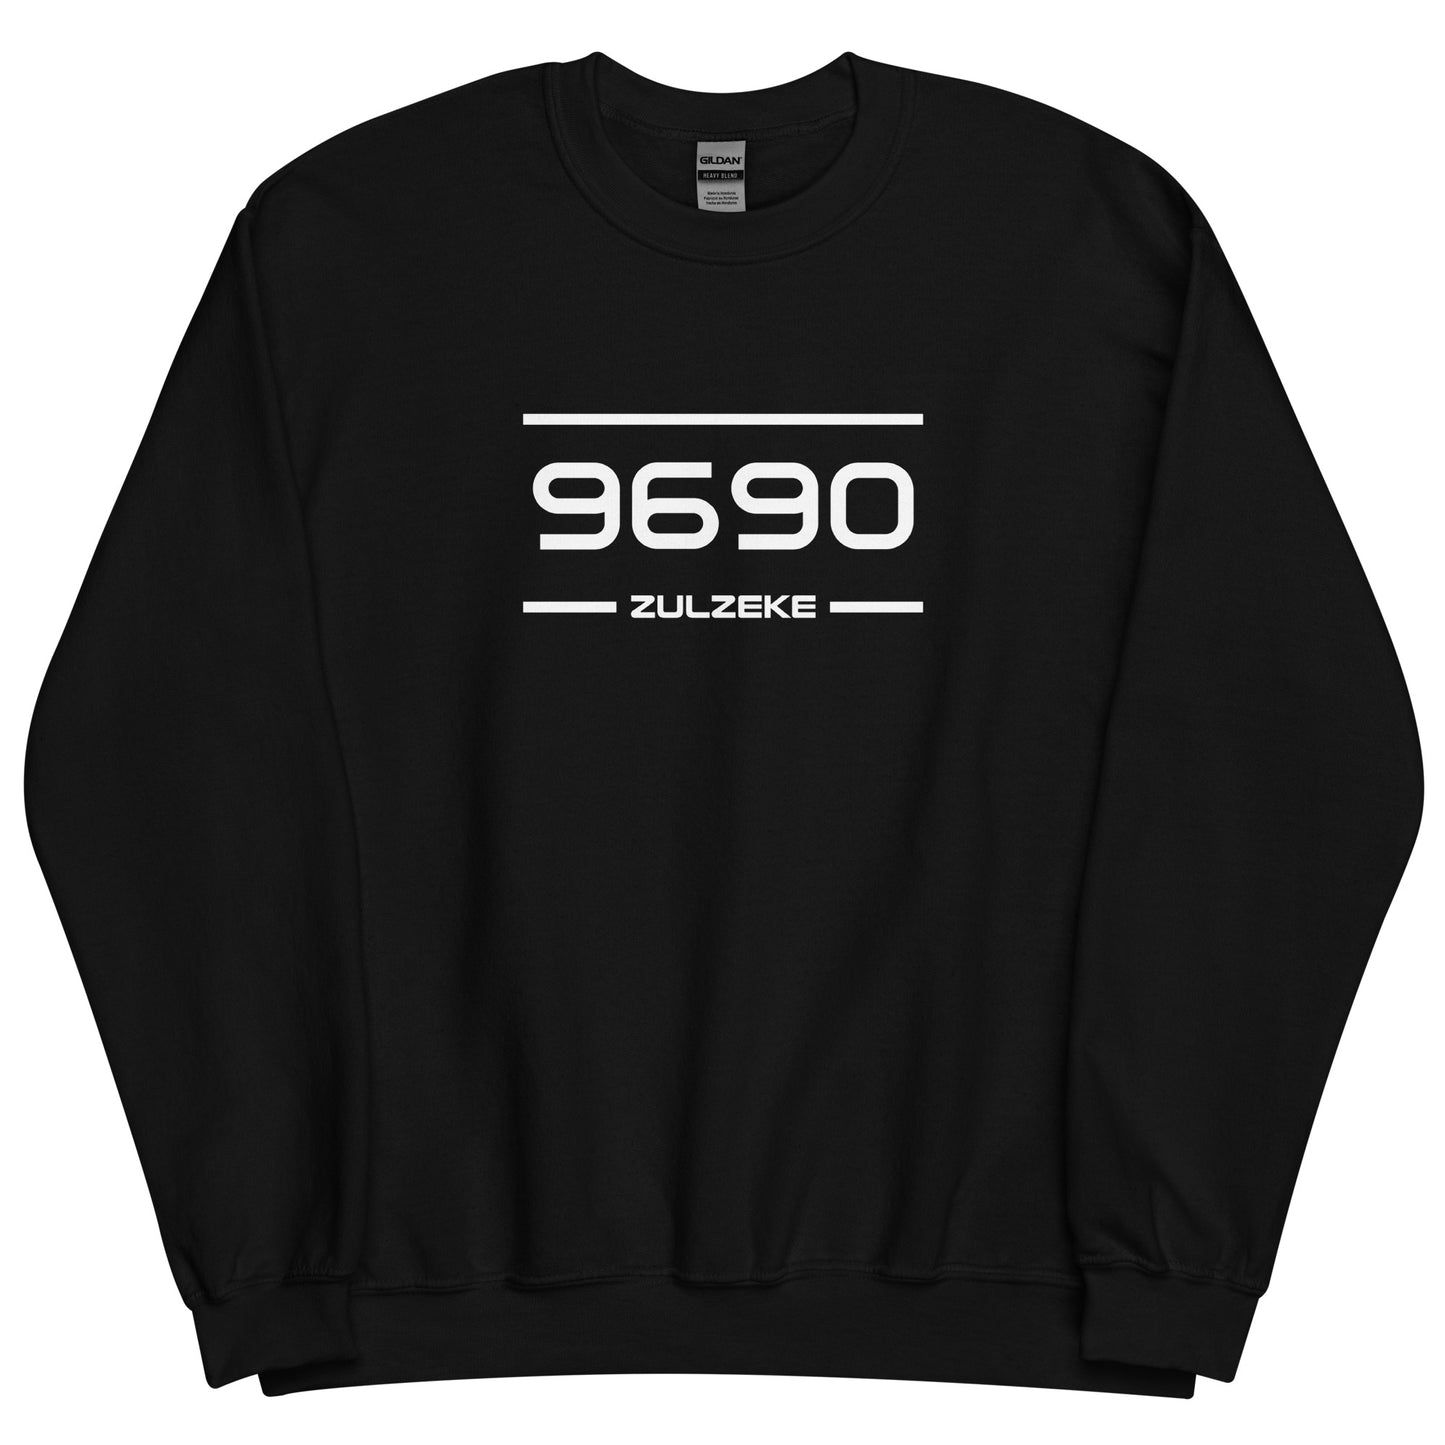 Sweater - 9690 - Zulzeke (M/V)